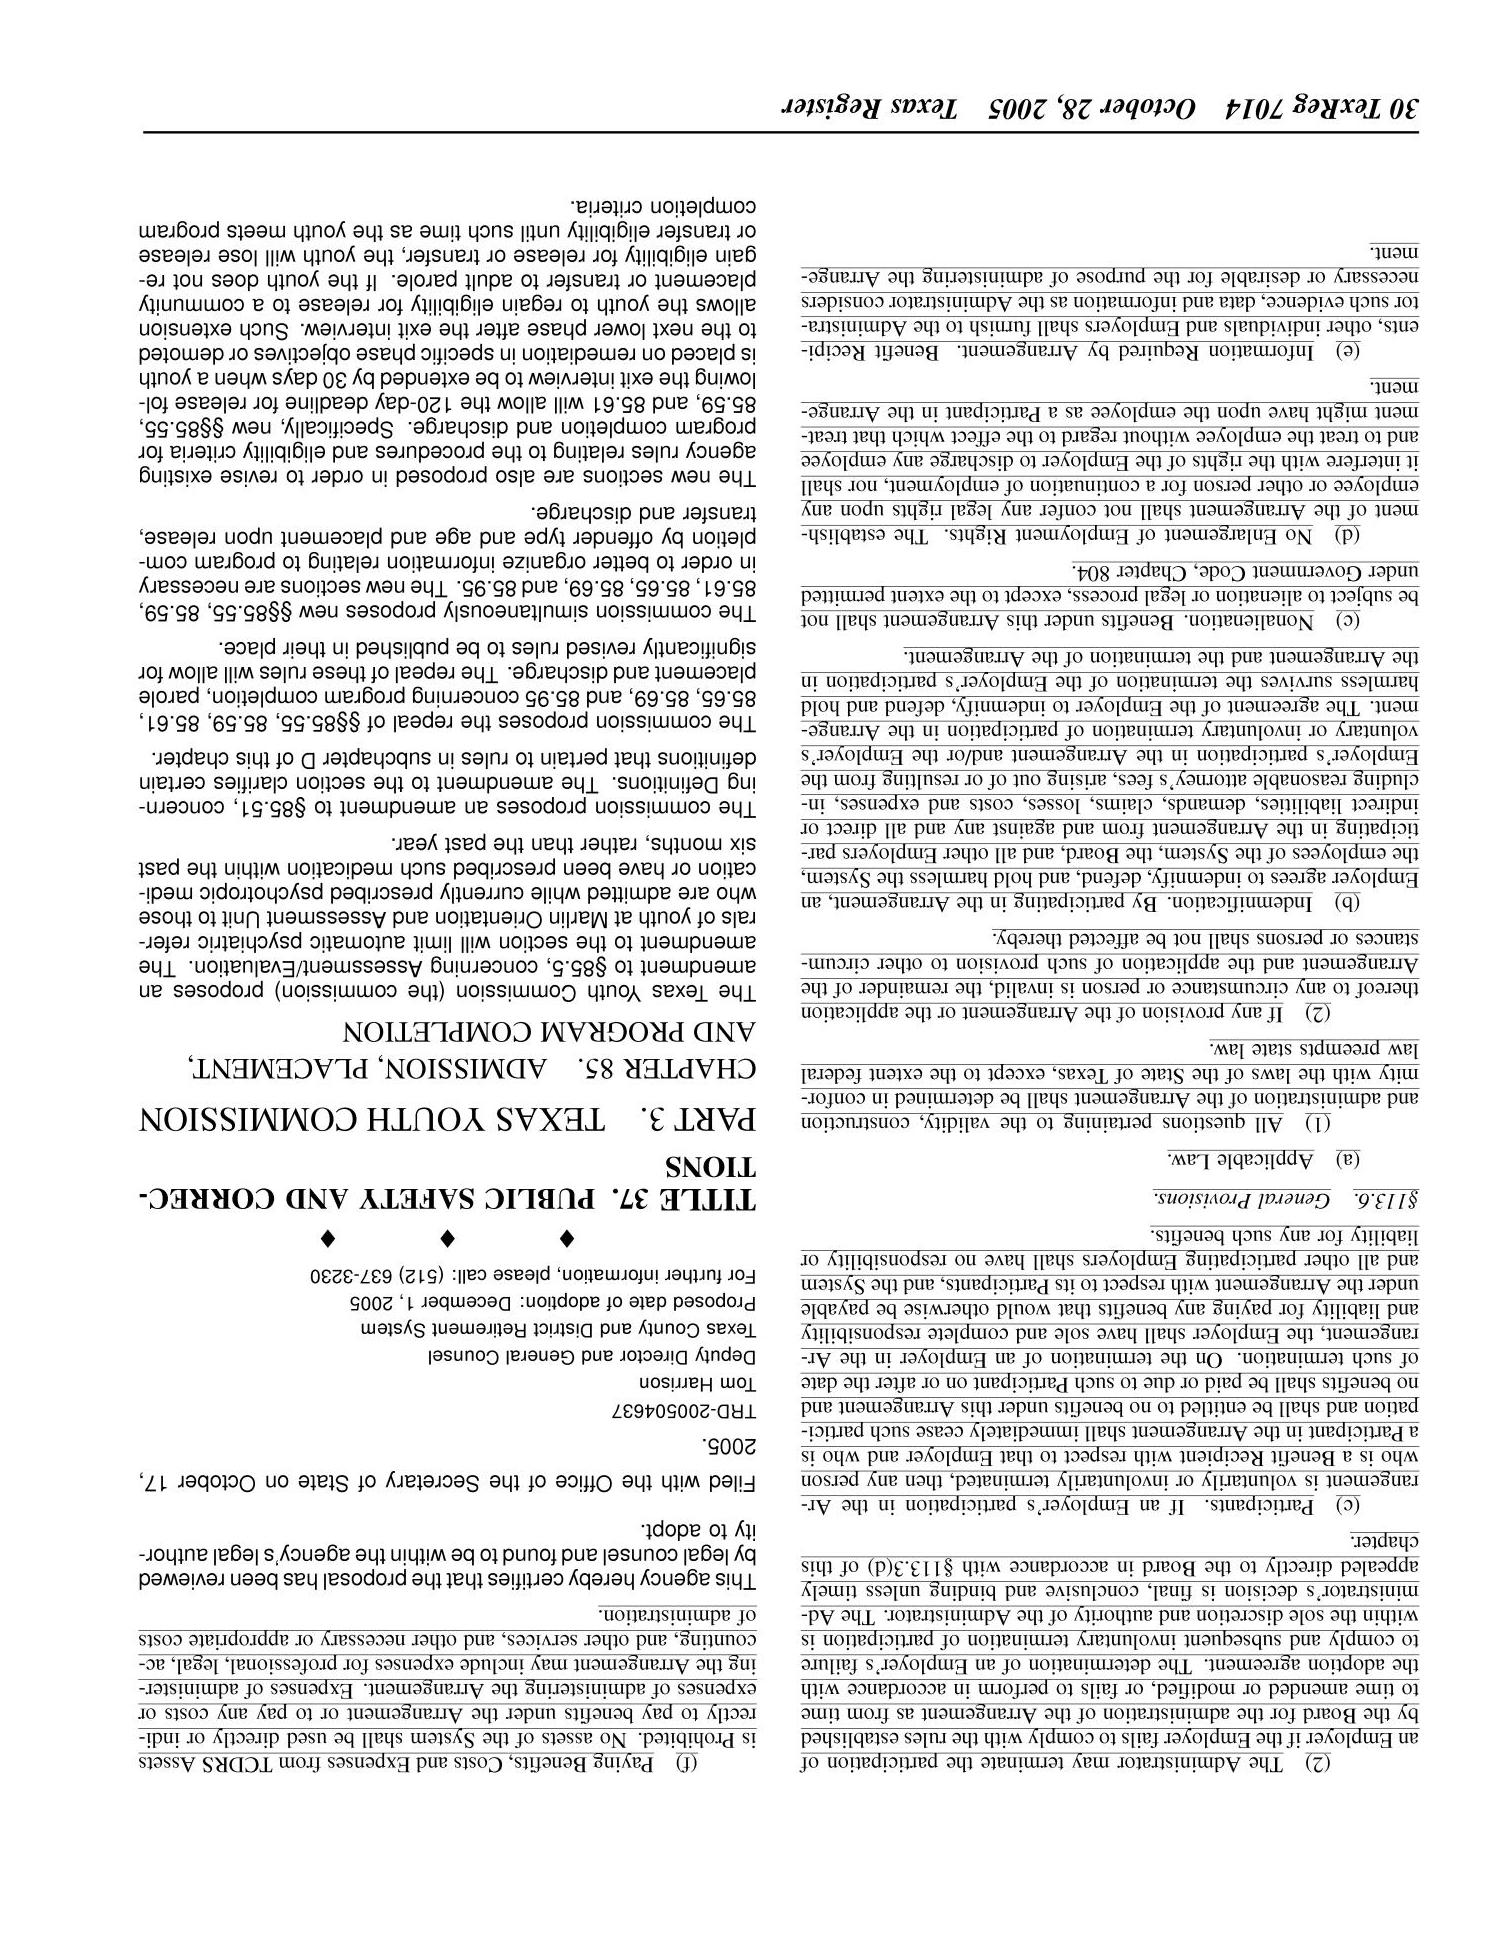 Texas Register, Volume 30, Number 43, Pages 6973-7094, October 28, 2005
                                                
                                                    7014
                                                